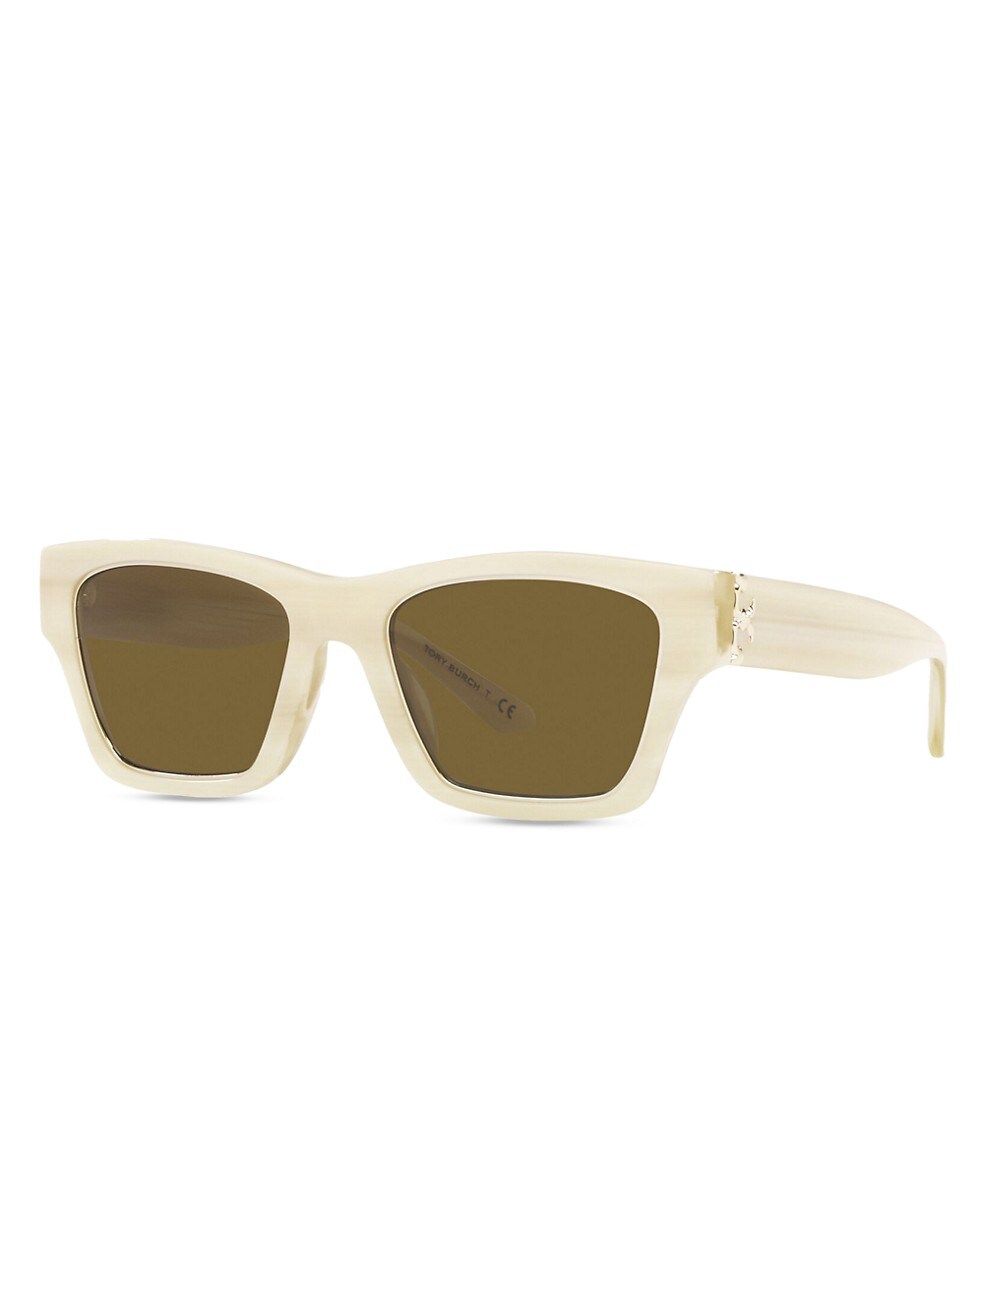 Tory Burch 52MM Square Sunglasses | Saks Fifth Avenue